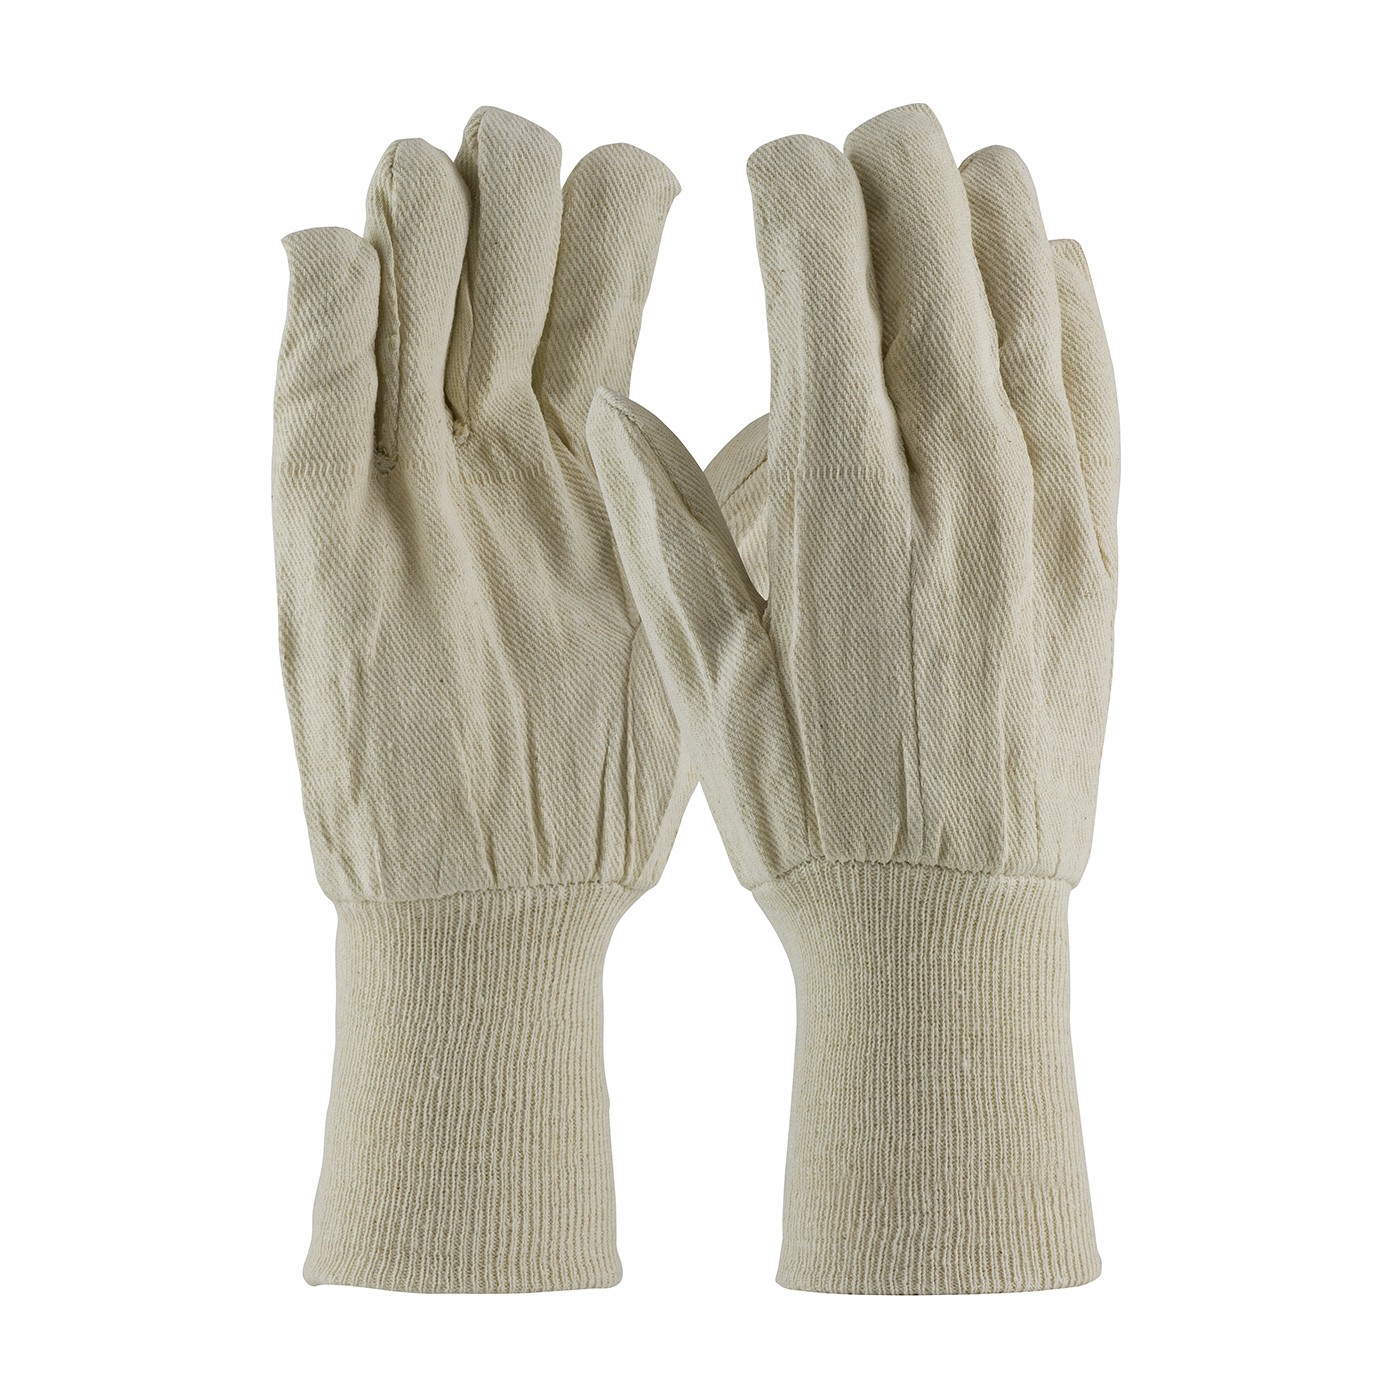 PIP® Premium Grade Cotton Canvas Single Palm Glove - Extended Knitwrist  (#90-908/5KW)